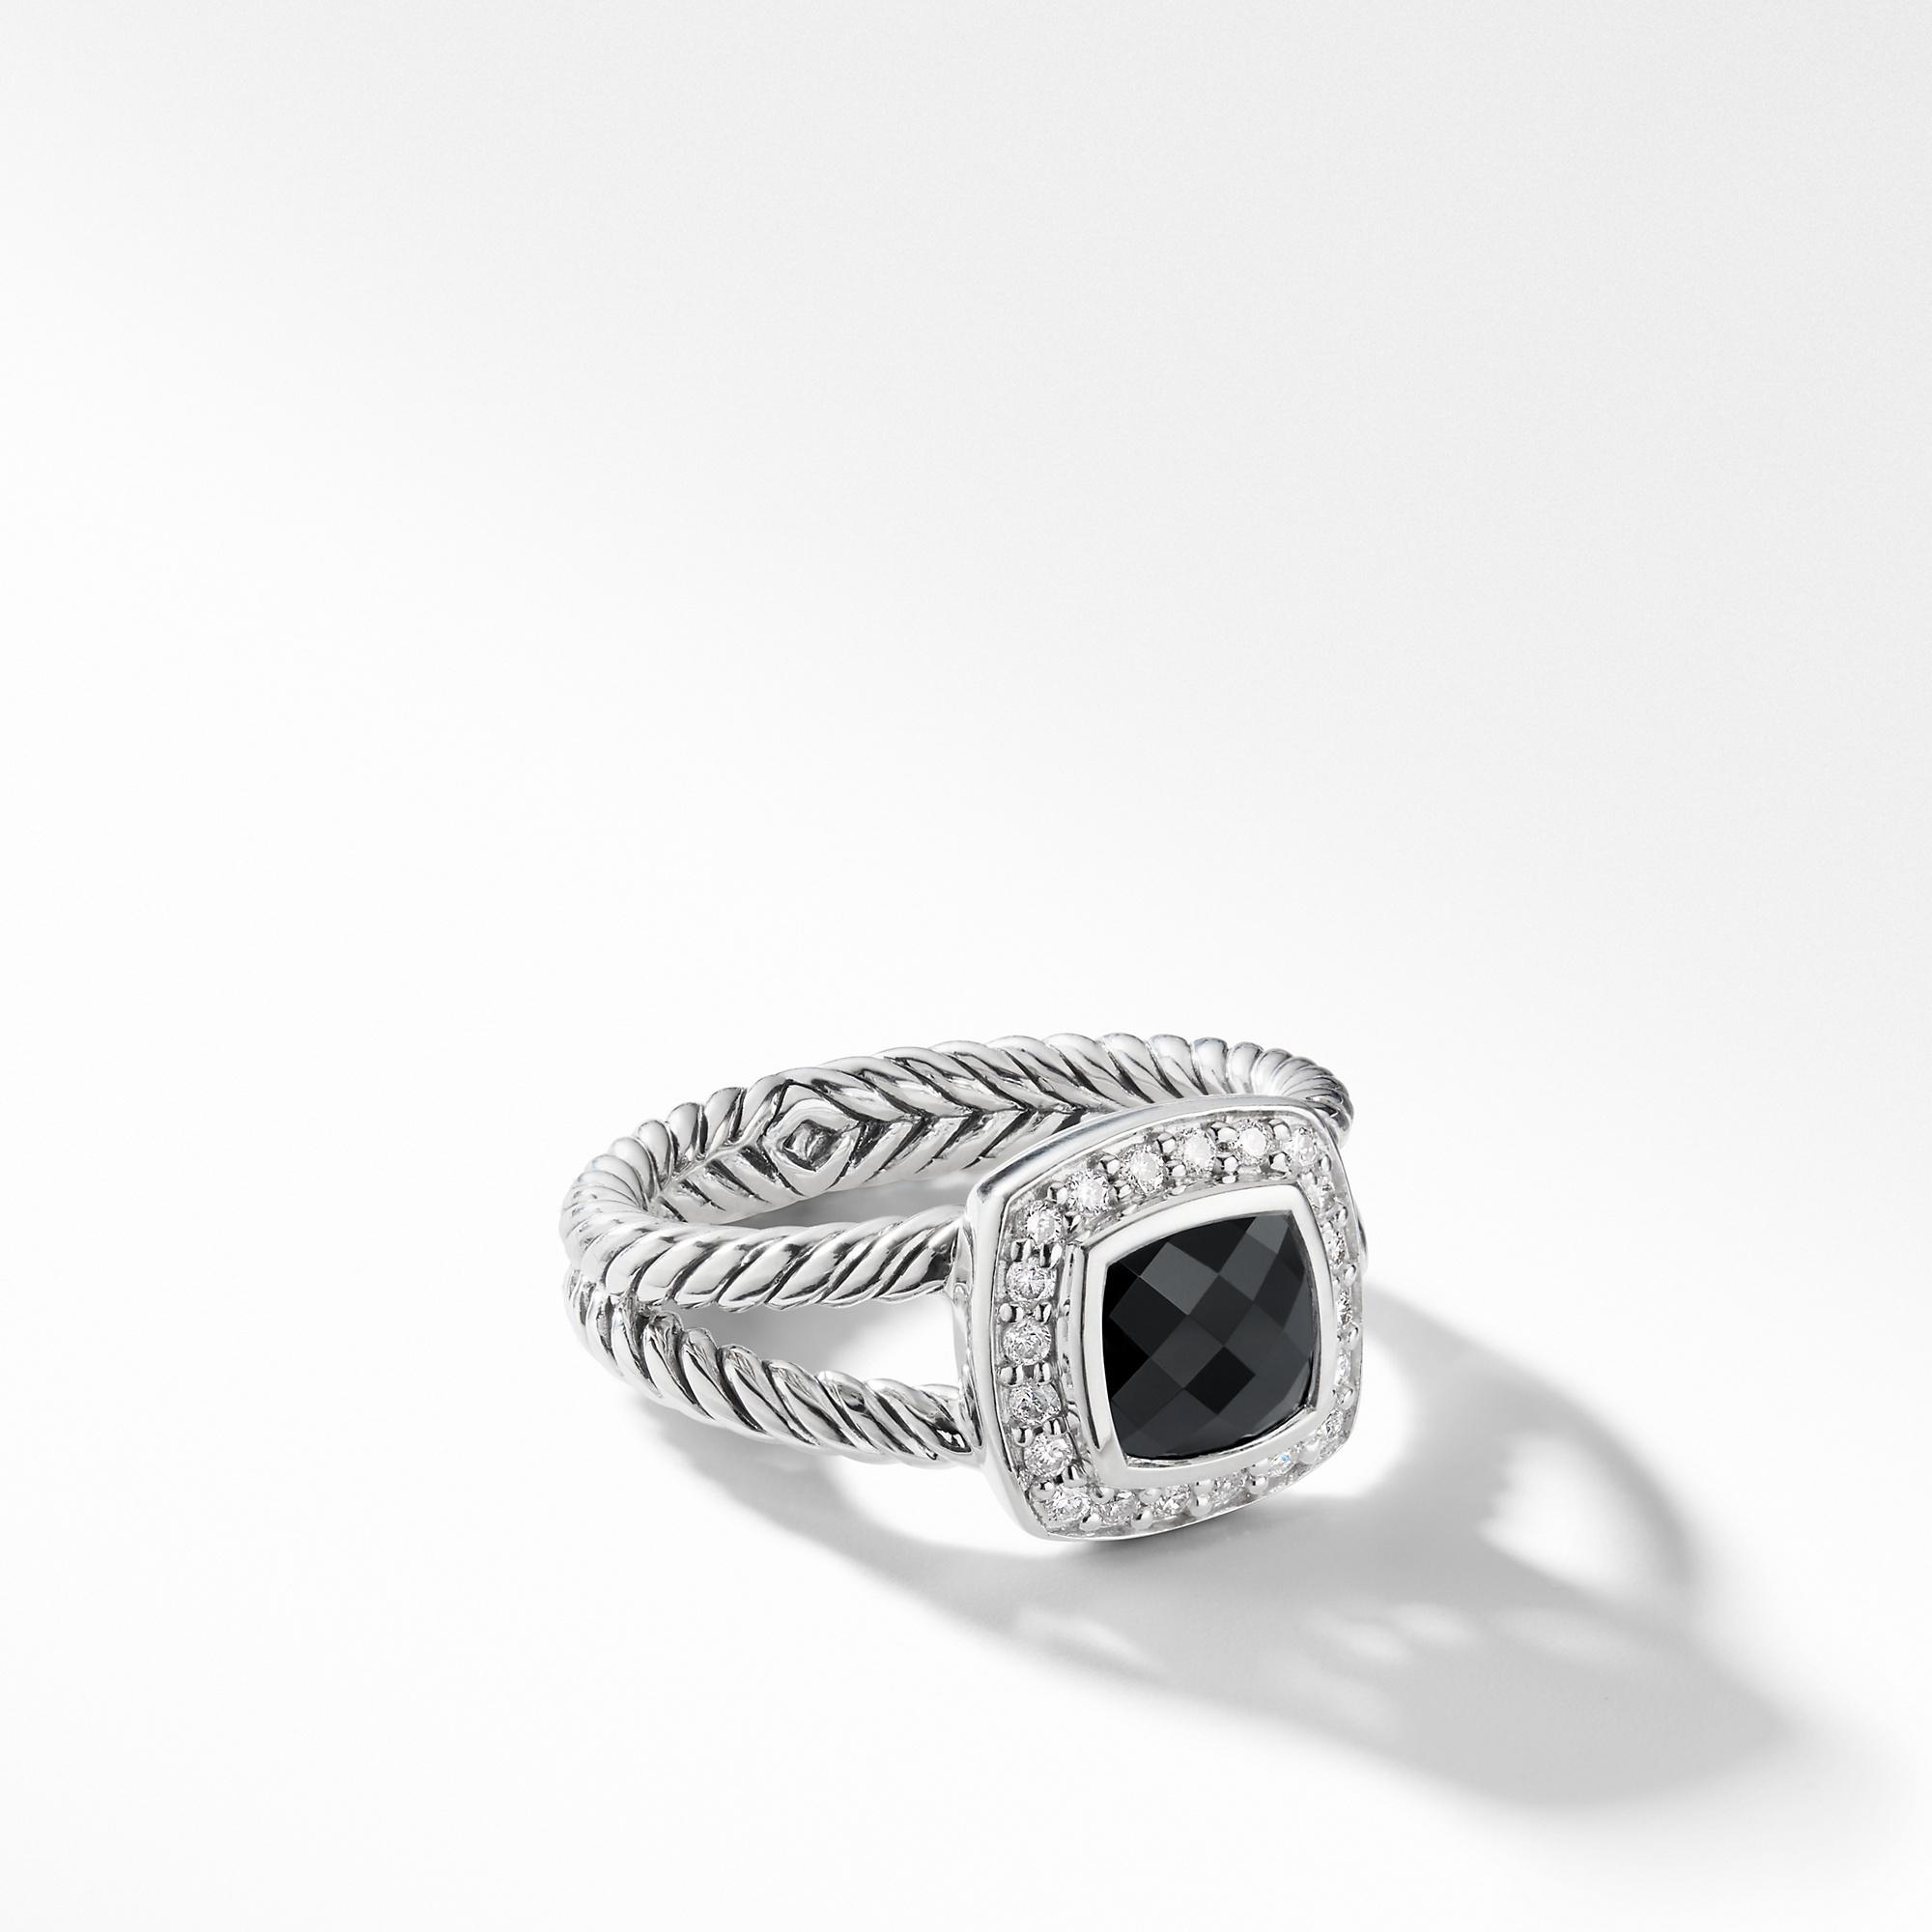 David Yurman Petite Albion Ring with Black Onyx and Diamonds, size 6